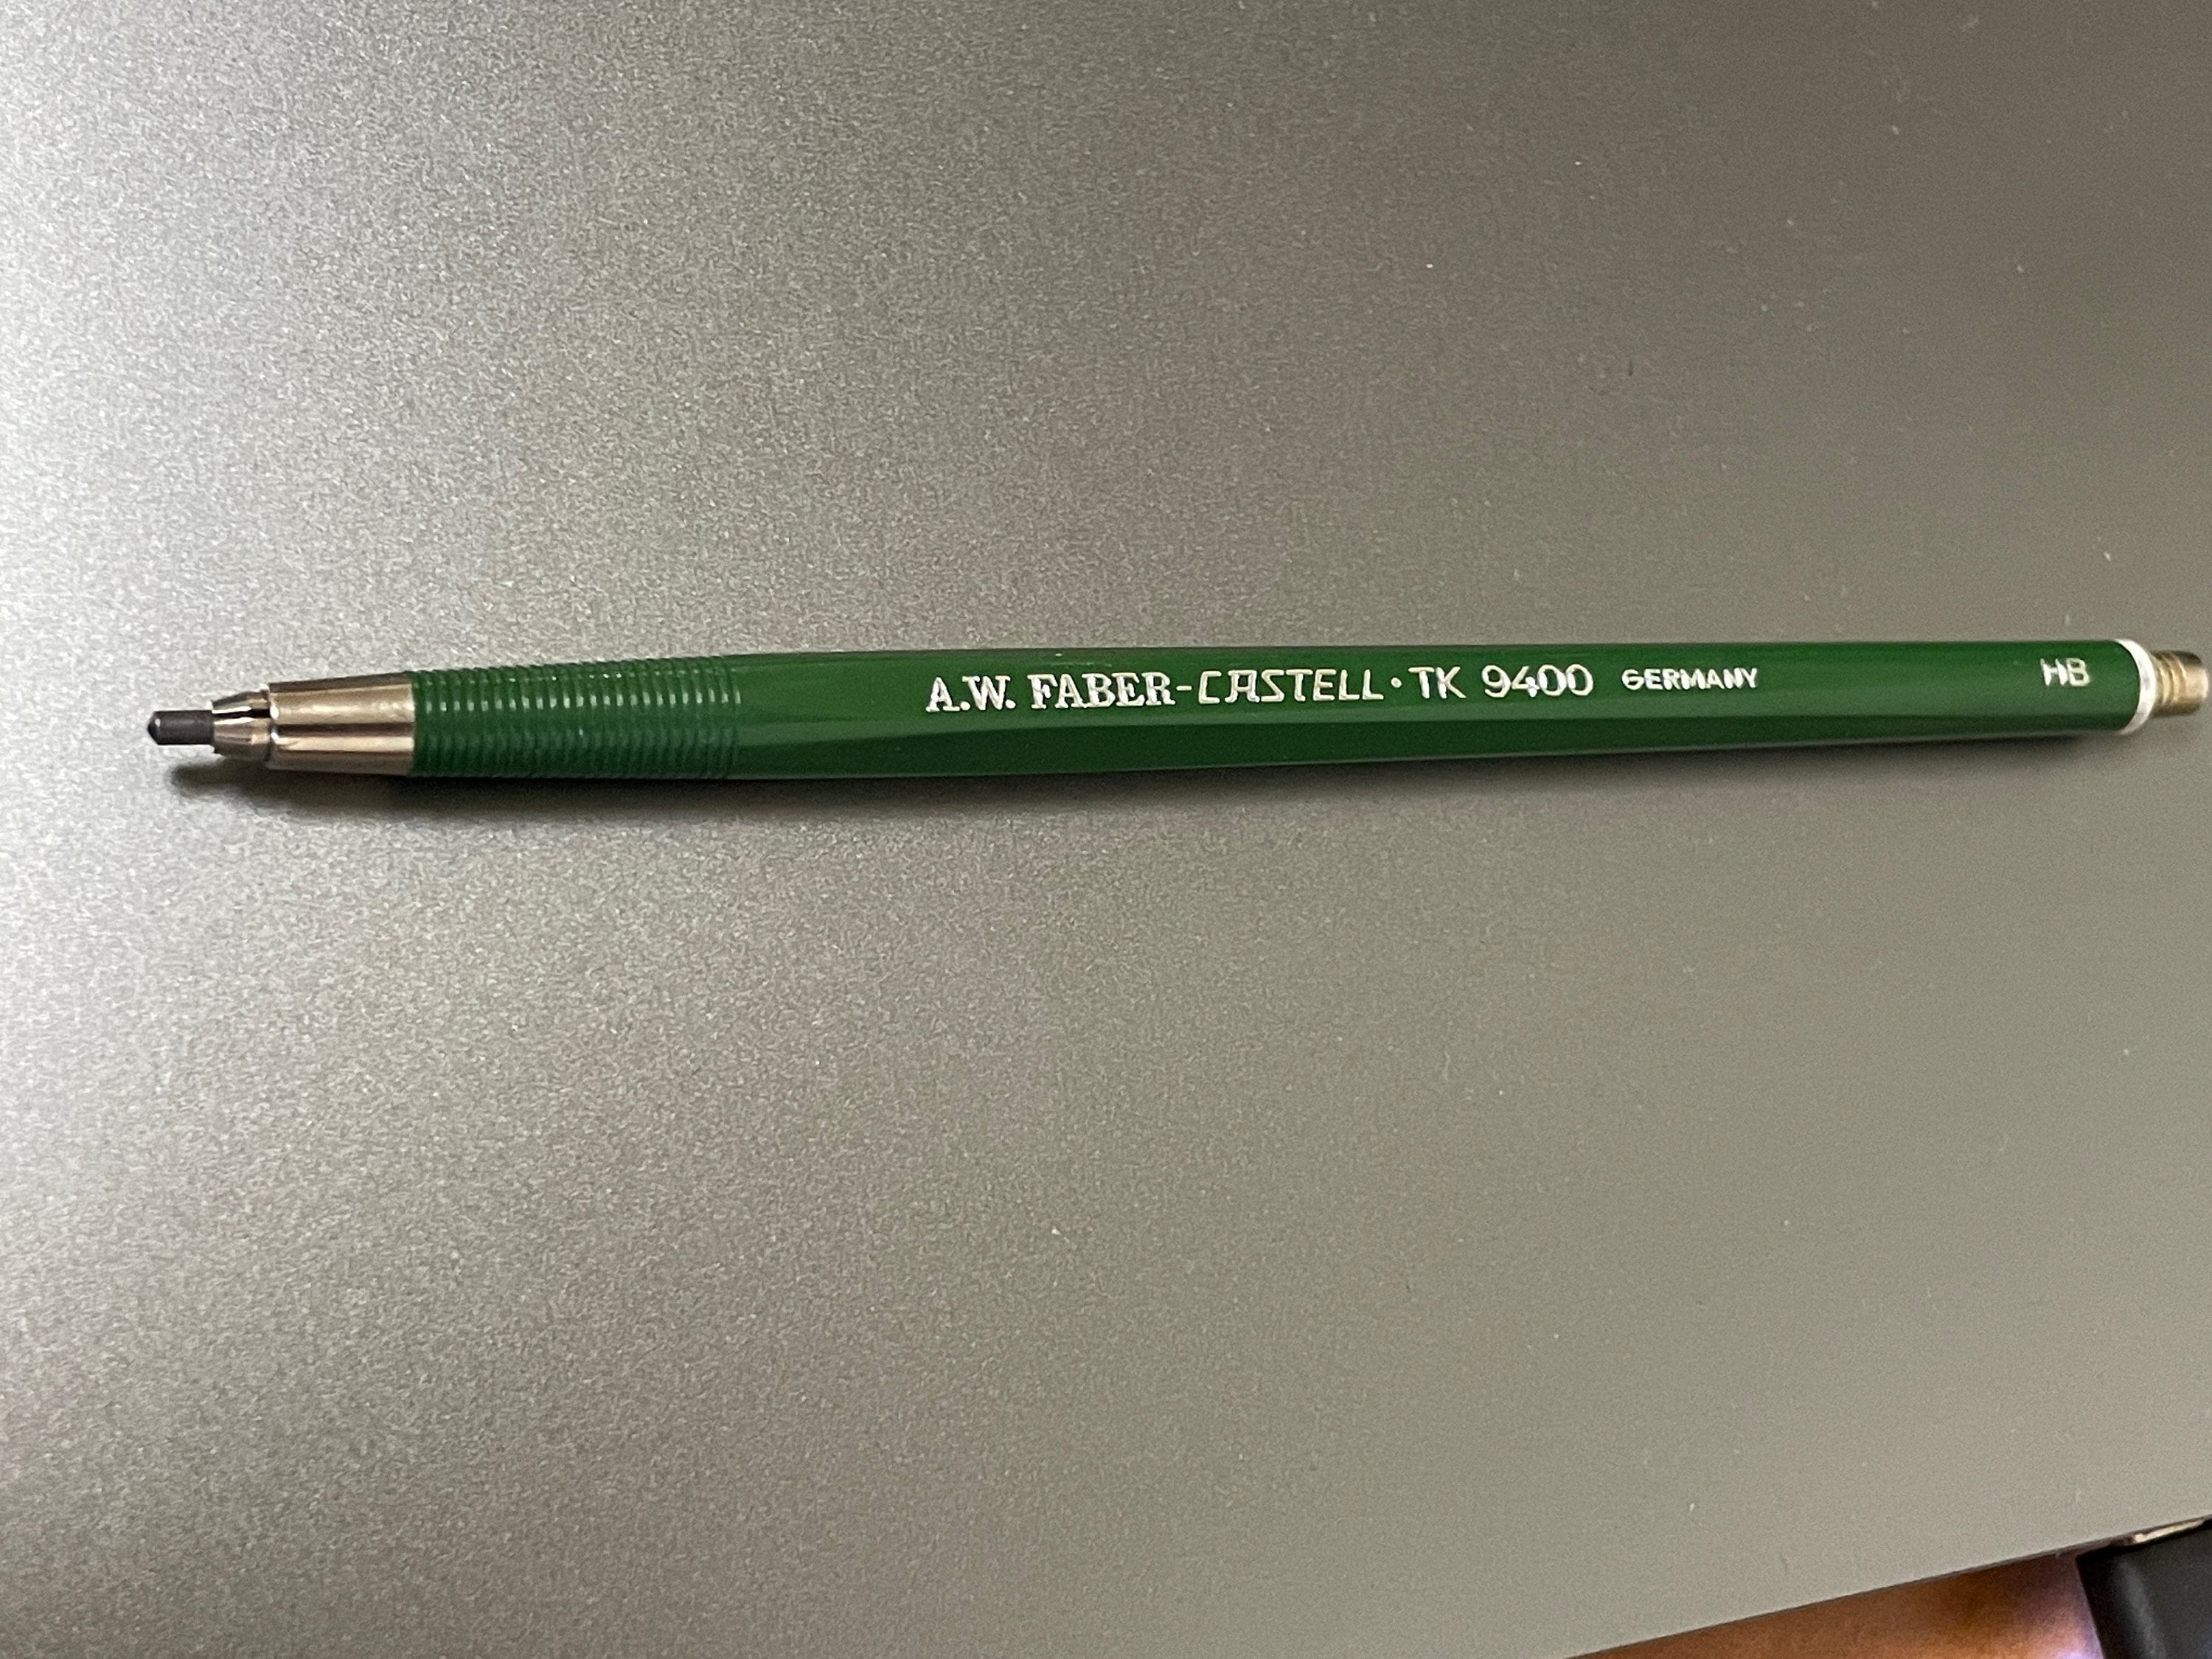 A.W. Faber Castell TK 9400 Clutch Pencil GERMANY HB Green vintage